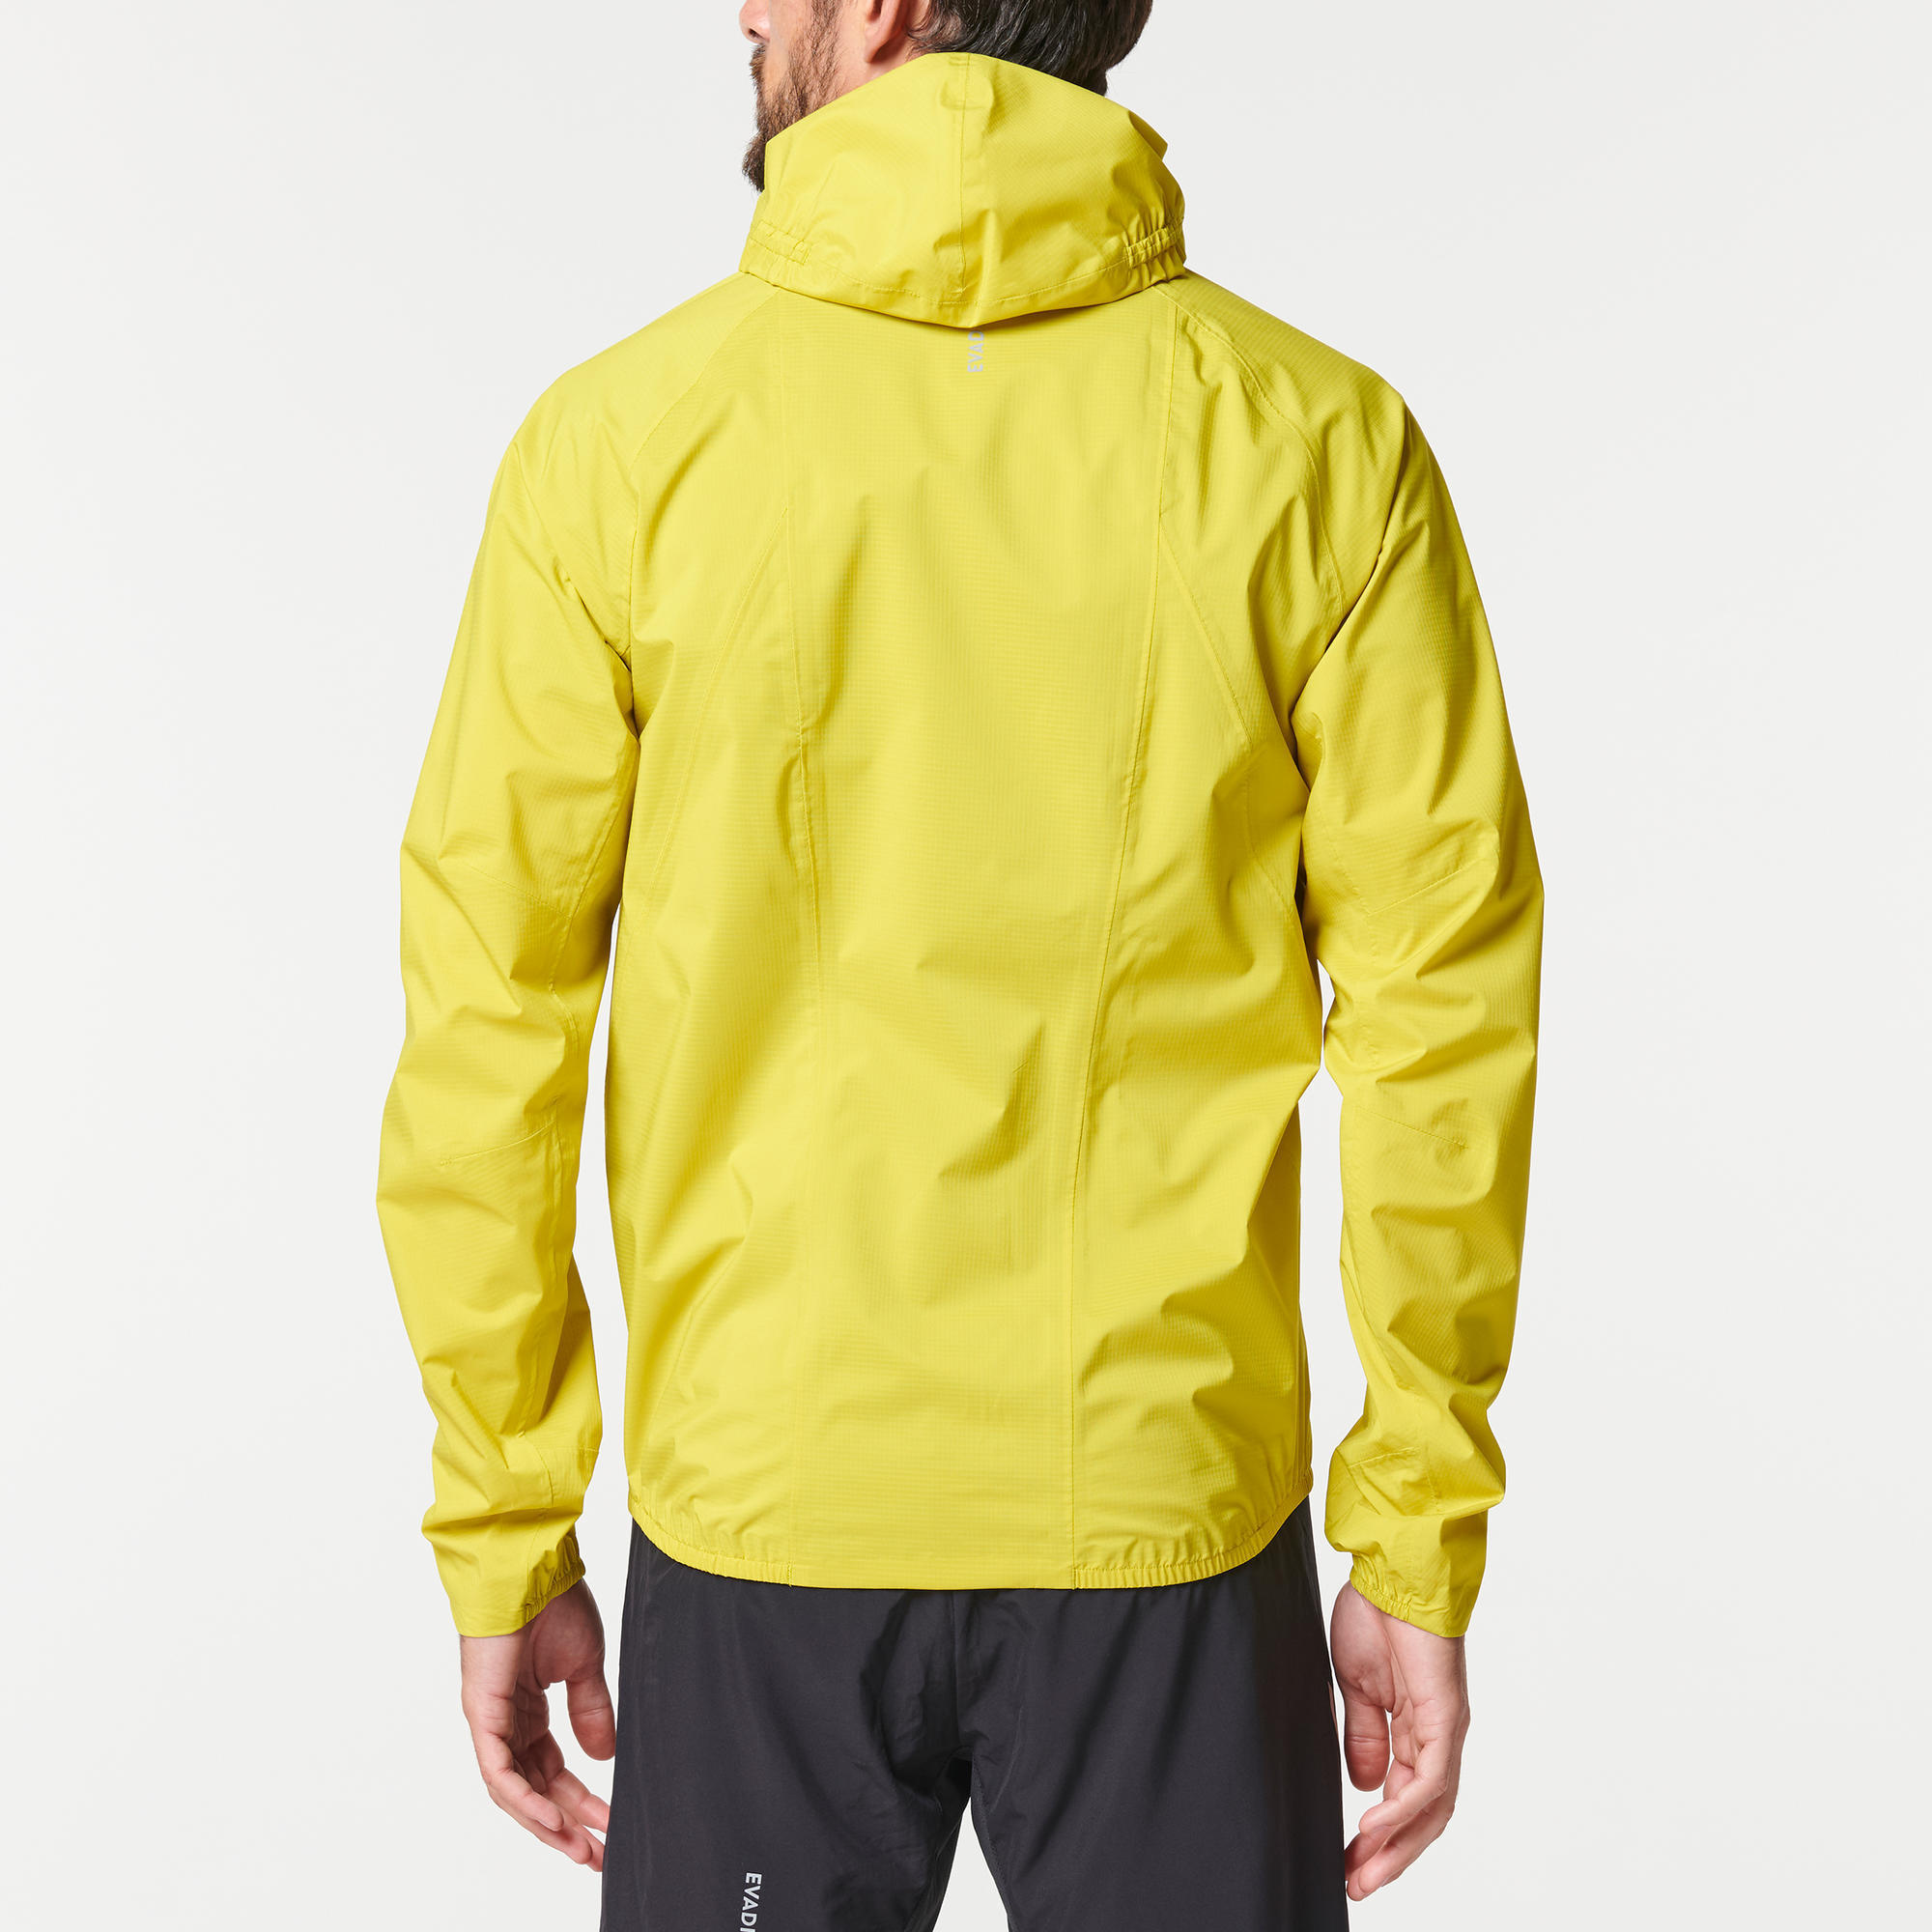 waterproof running jacket decathlon